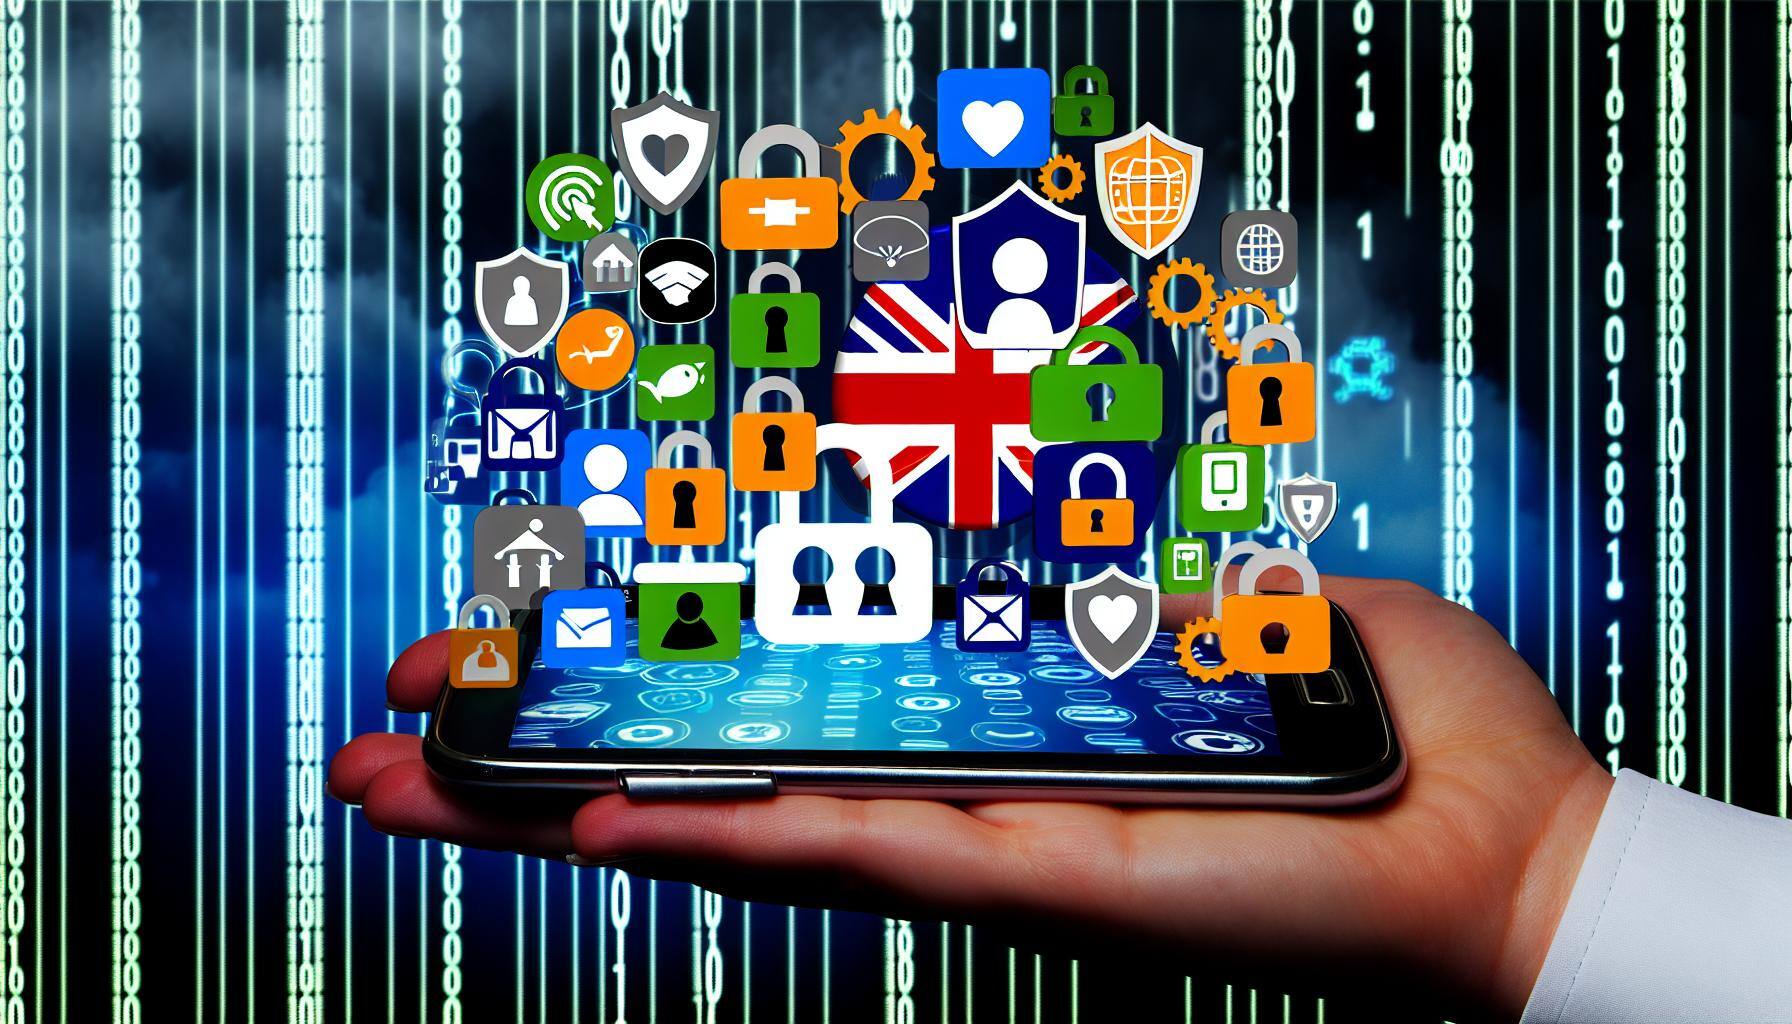 An image of the UK DMCC legislation impacting mobile app security in the digital market